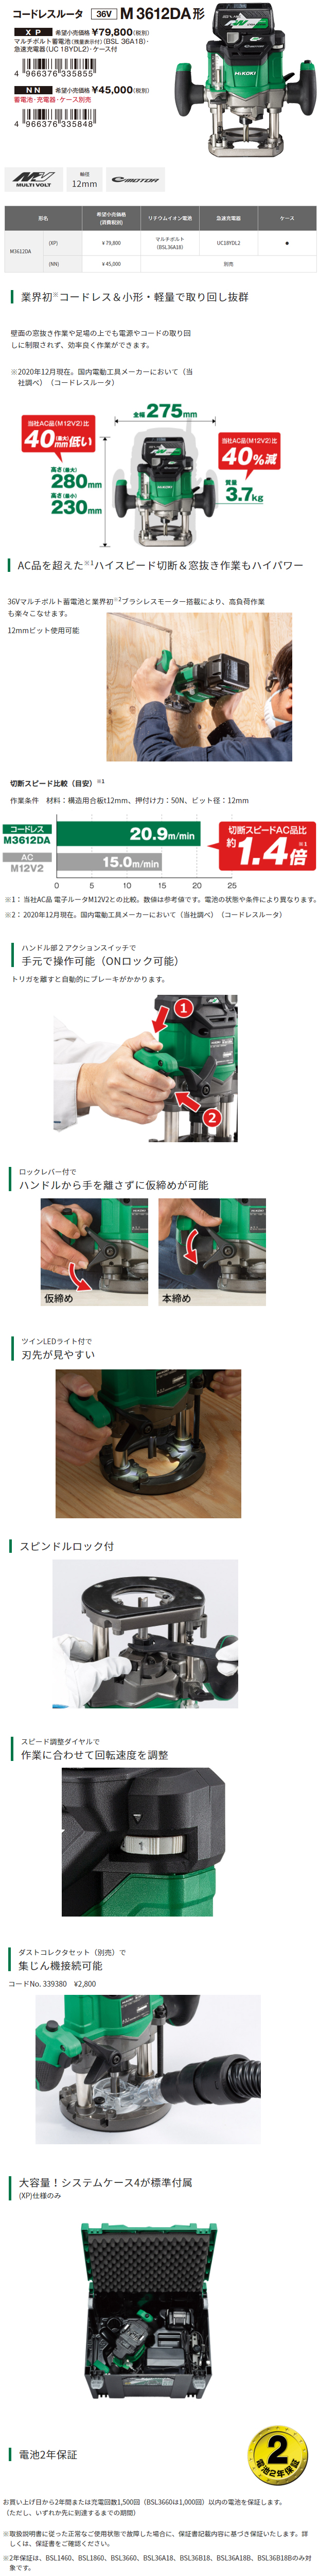 Hikoki 36Vコードレスルータ M3612DA 電動工具・エアー工具・大工道具